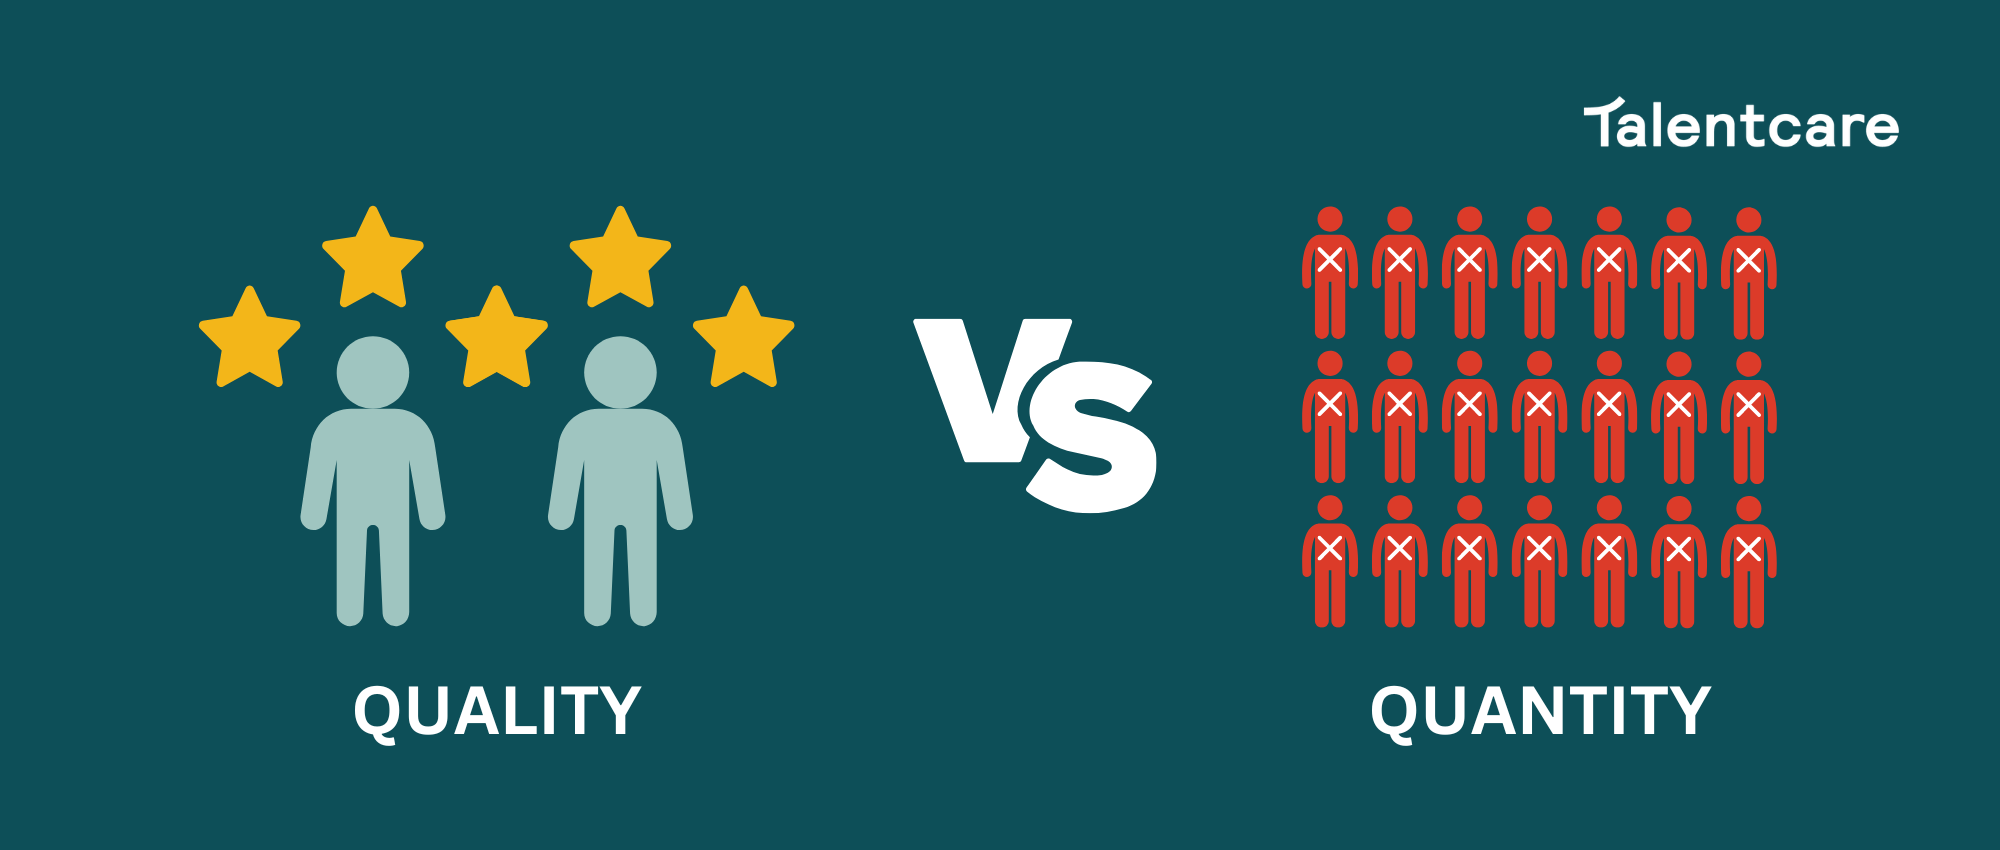 Quality vs Quantity Infographic